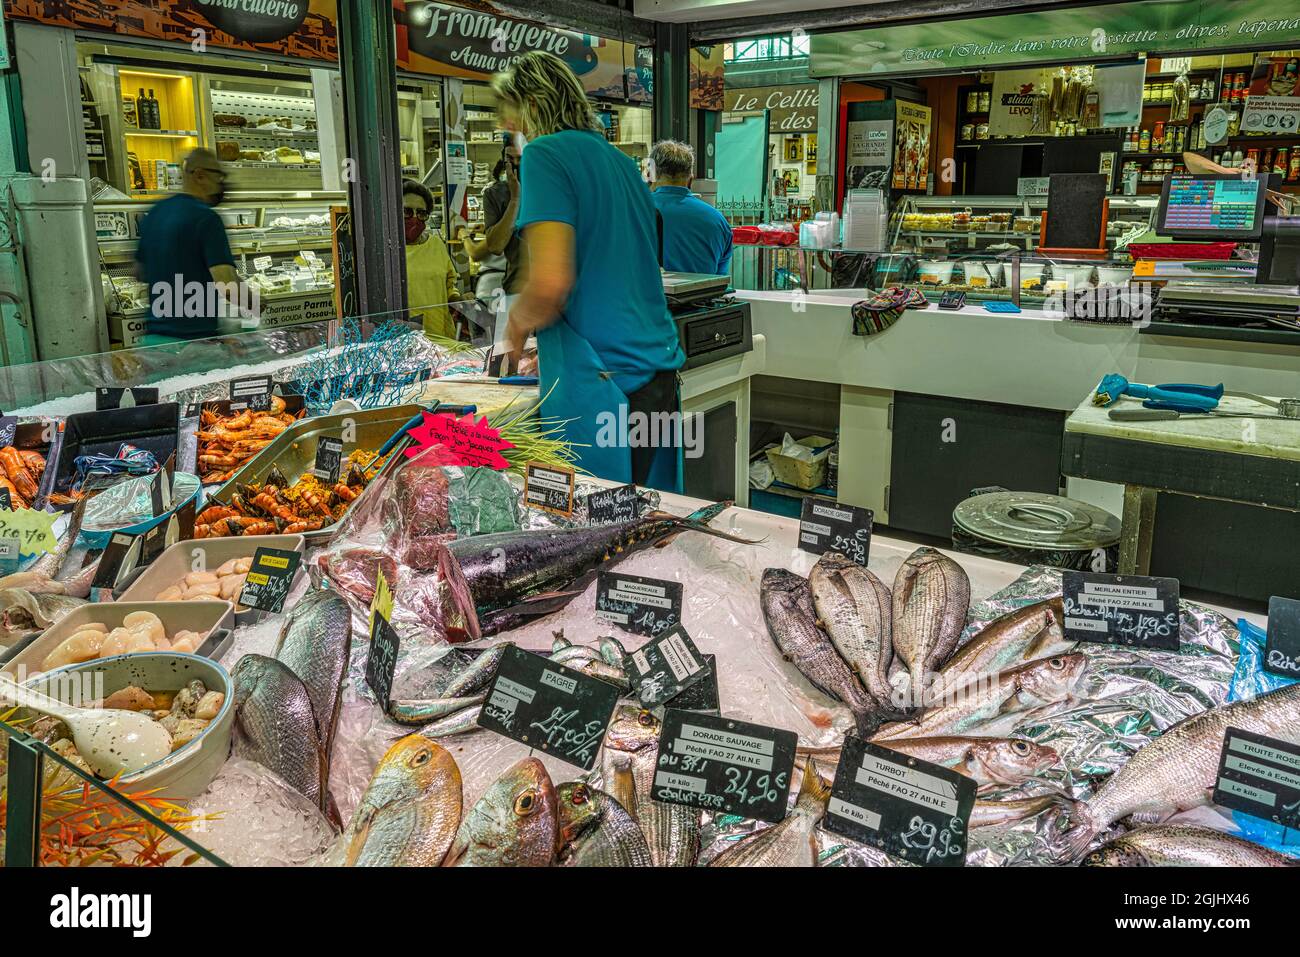 Grenoble covered market, fish stall. Grenoble, Auvergne-Rhône-Alps region, isère department, France, Europe Stock Photo